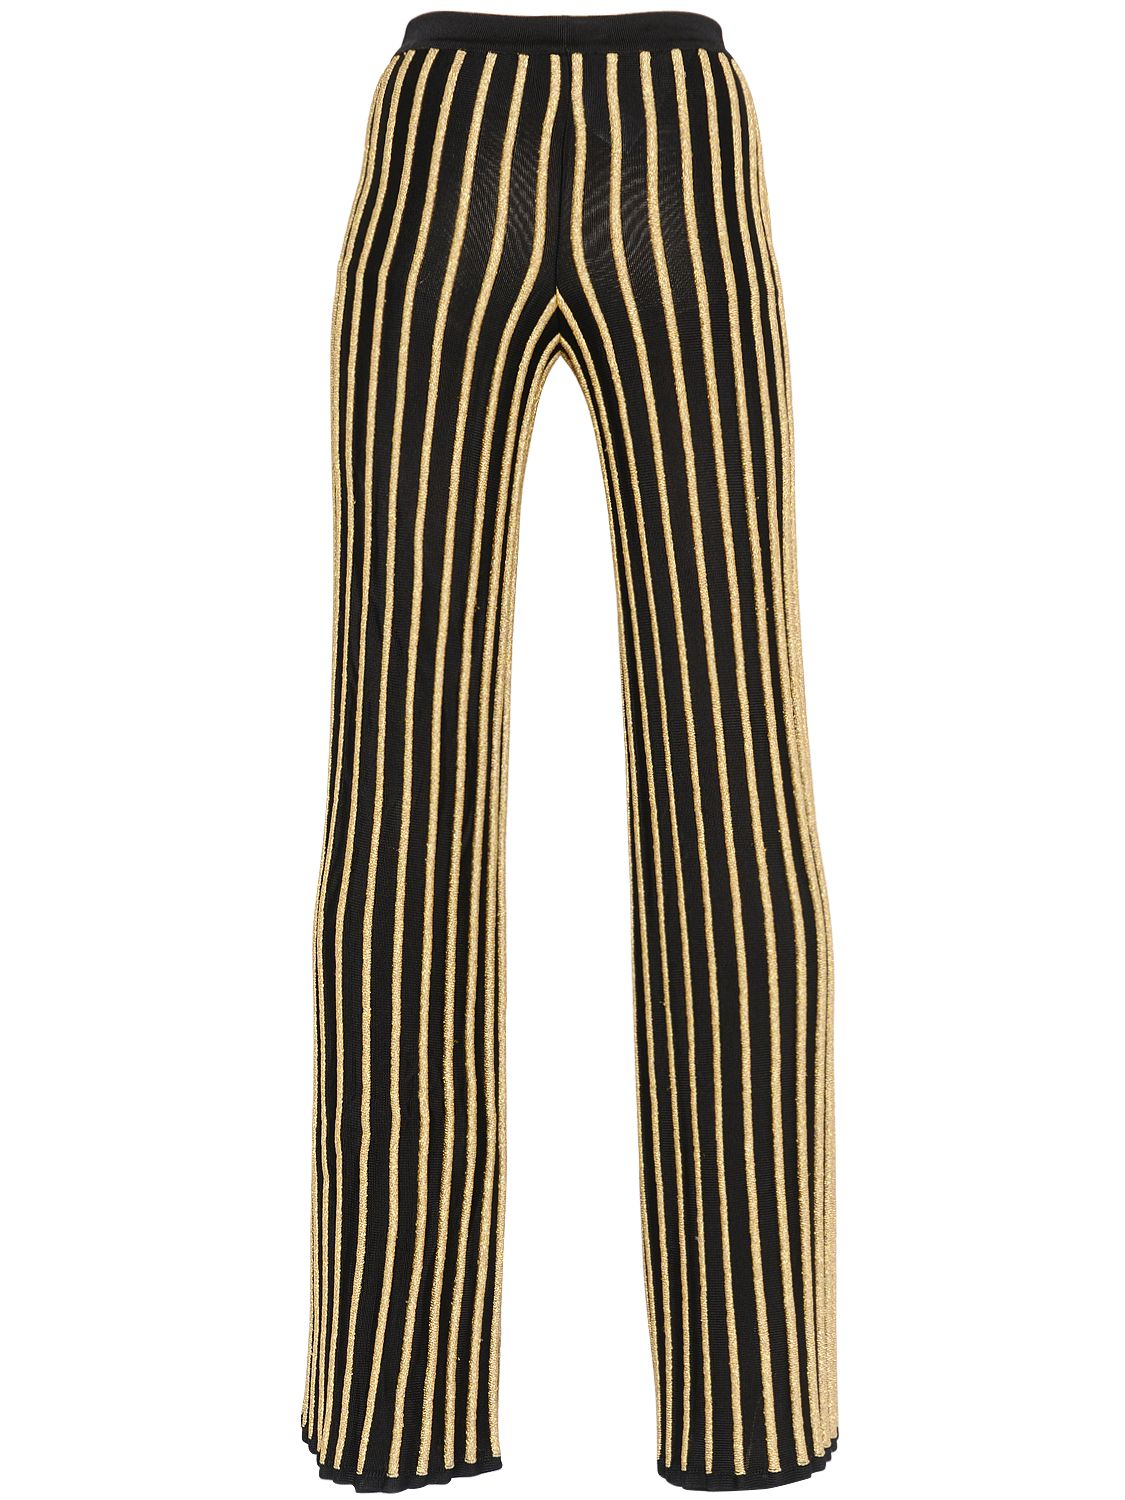 gold striped pants